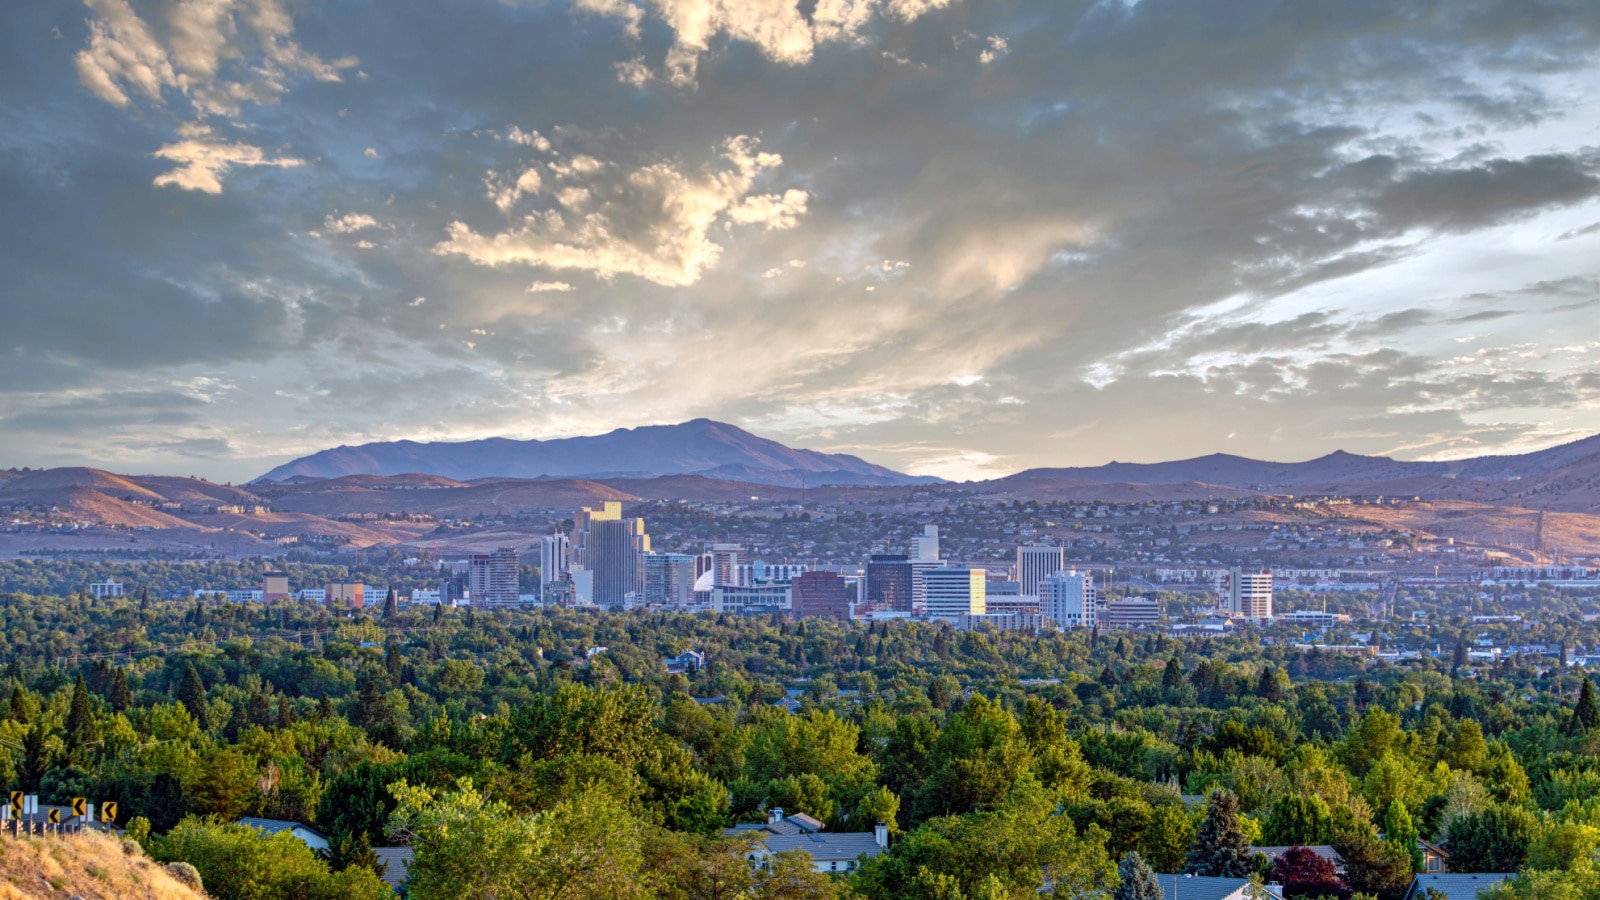 Cityscape of Reno Nevada with a dramatic sky.